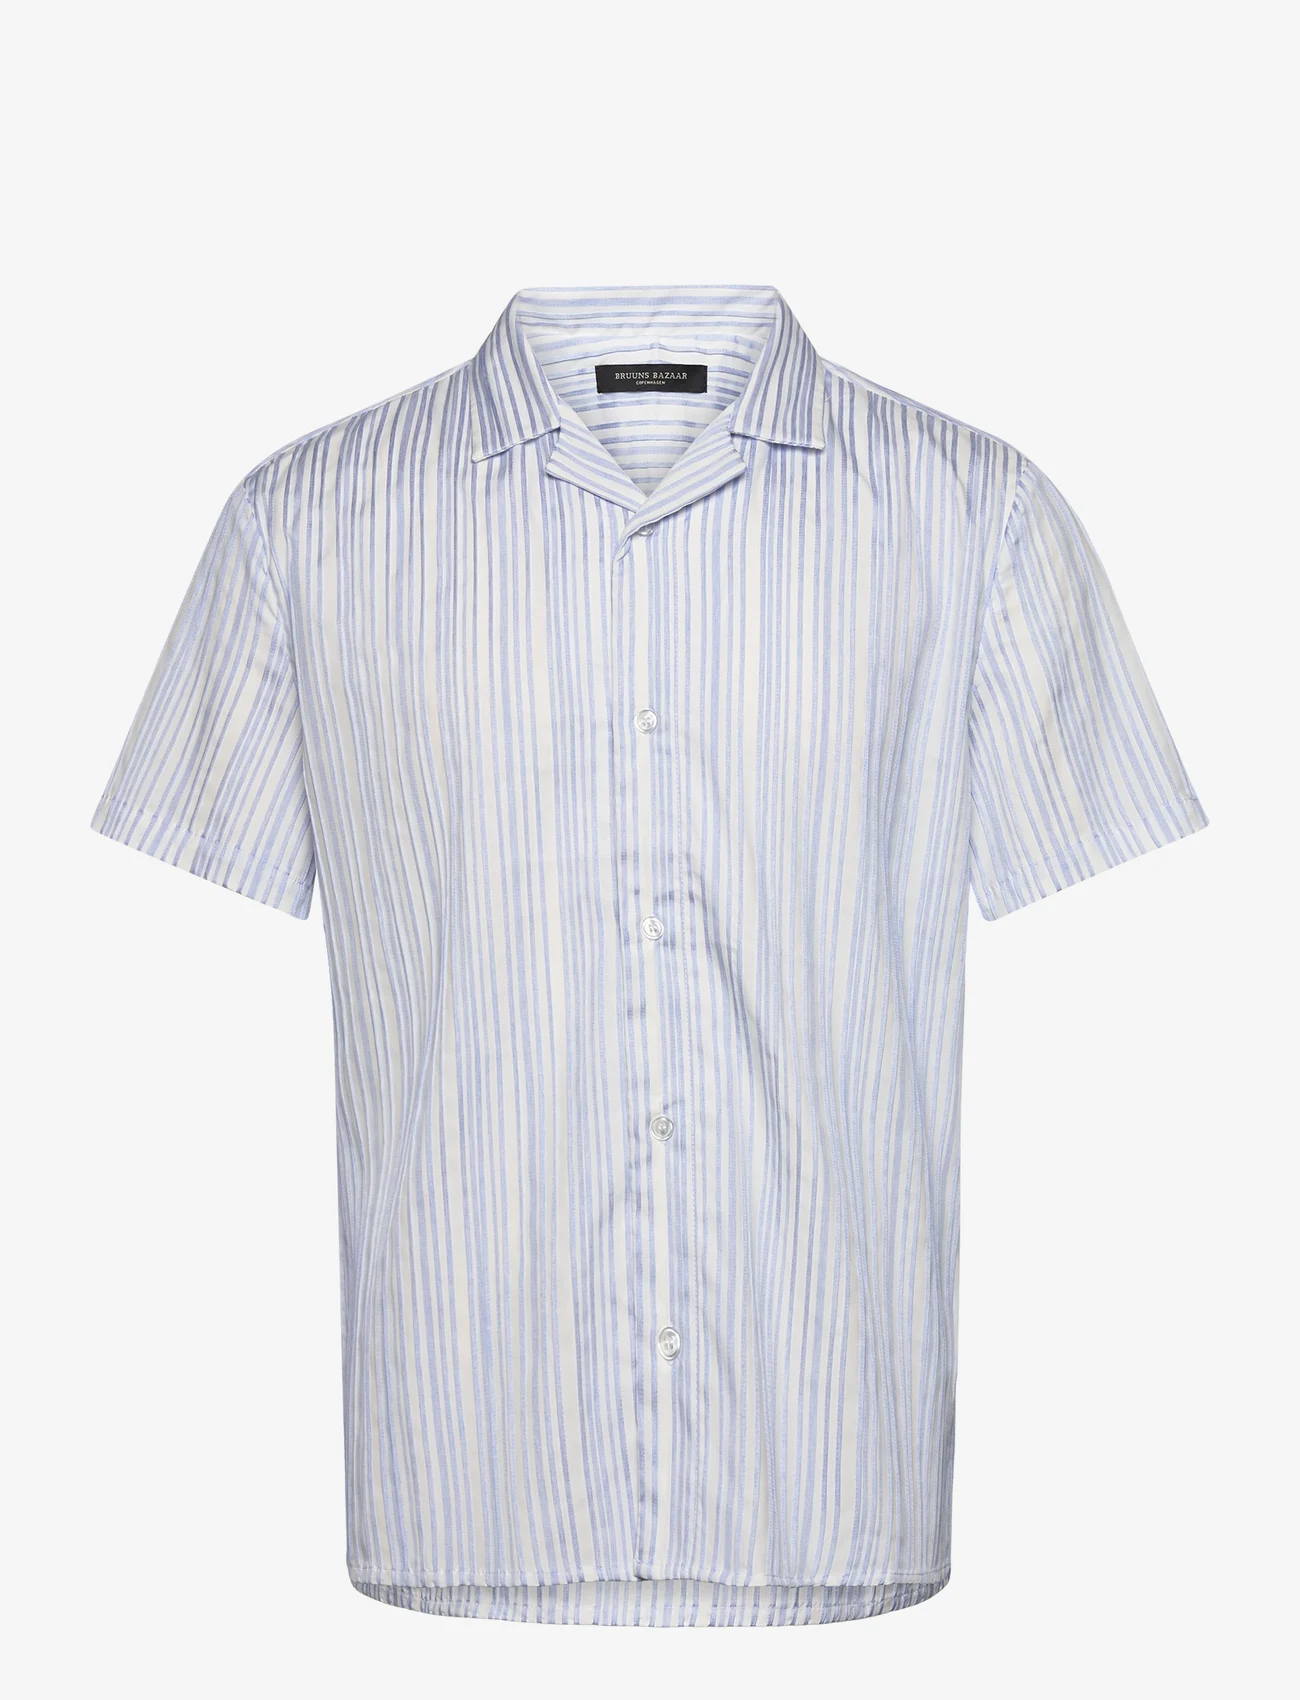 Bruuns Bazaar - DimensionBBHomme shirt - short-sleeved shirts - light blue stripe - 0